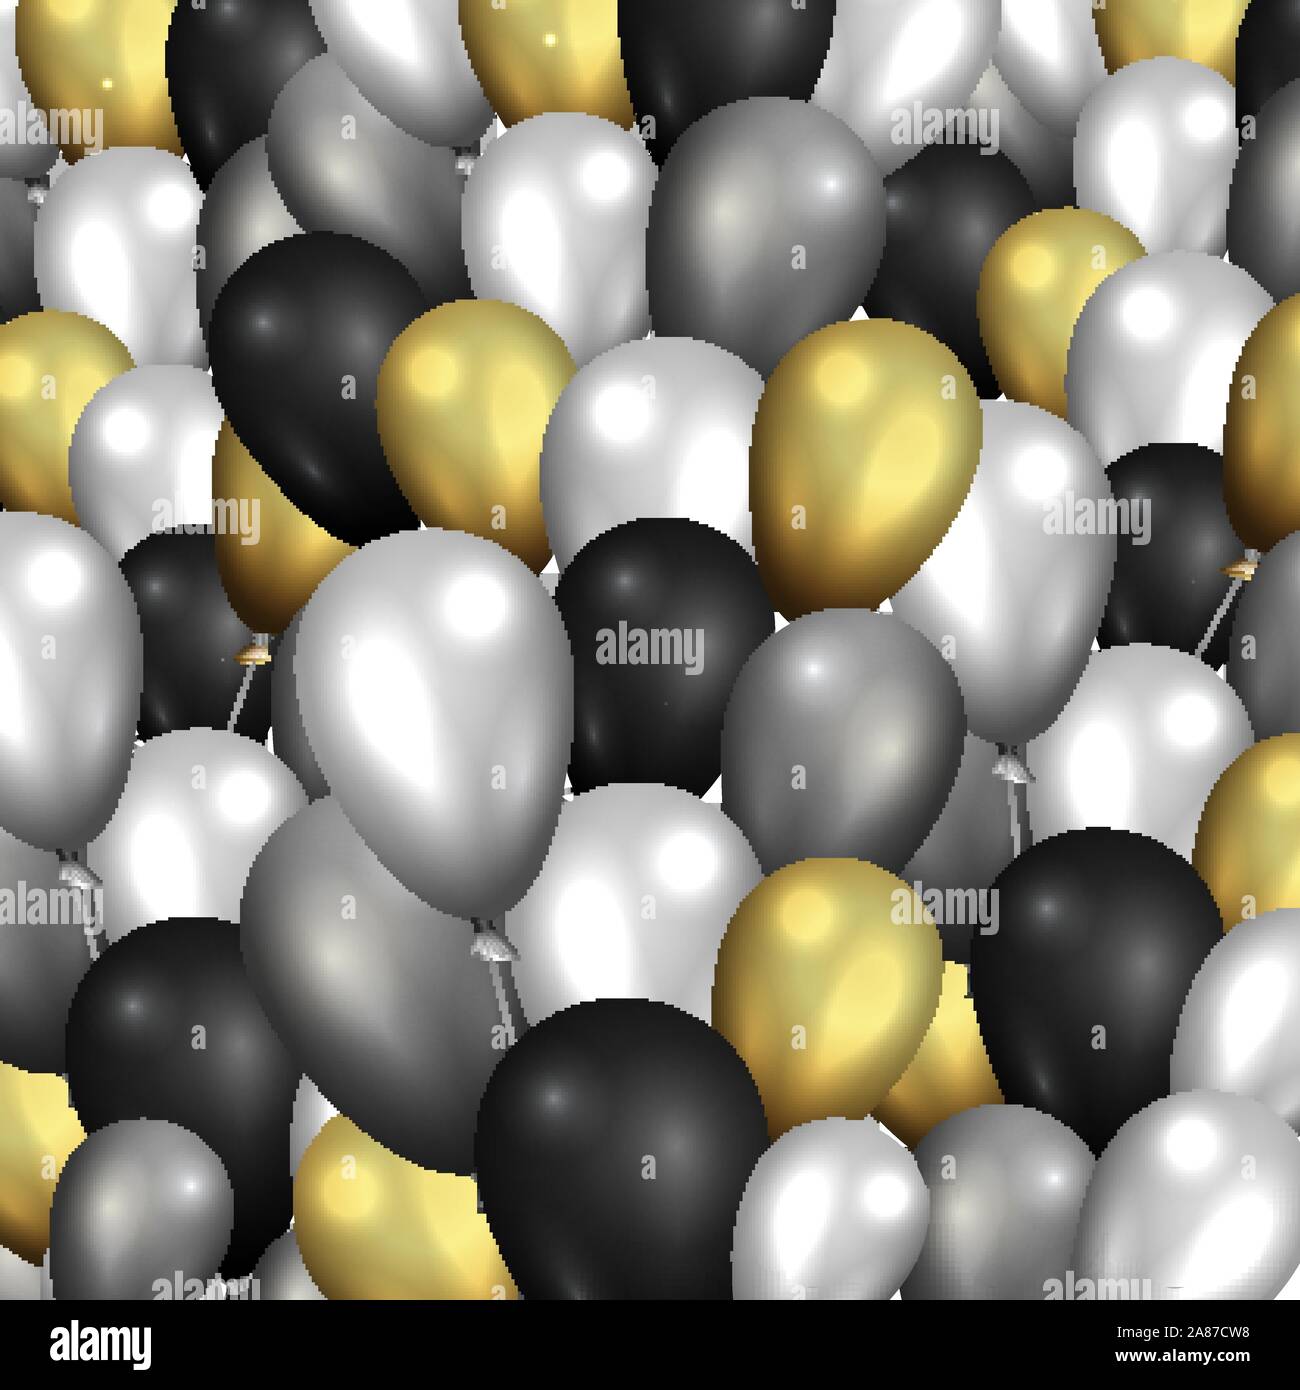 https://c8.alamy.com/compes/2a87cw8/negro-dorado-de-helio-y-globos-plateados-de-trama-de-fondo-para-web-impresion-y-decoracion-2a87cw8.jpg